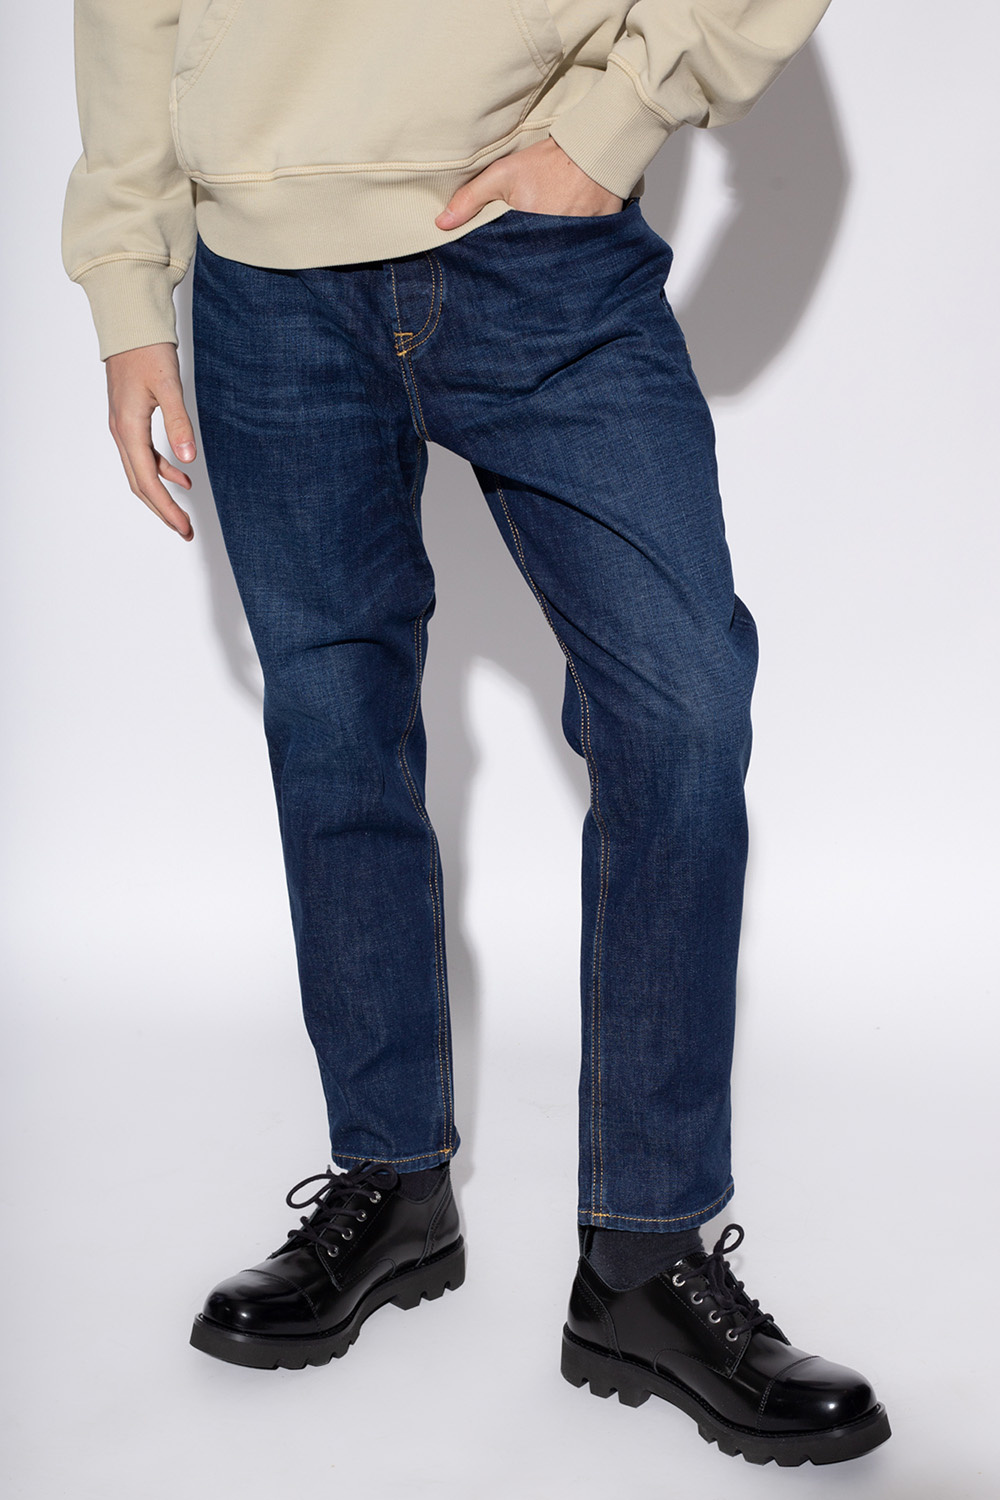 Diesel \'D | puffball Clothing dress - bustier peplum jeans Fining\' | Men\'s - JmksportShops